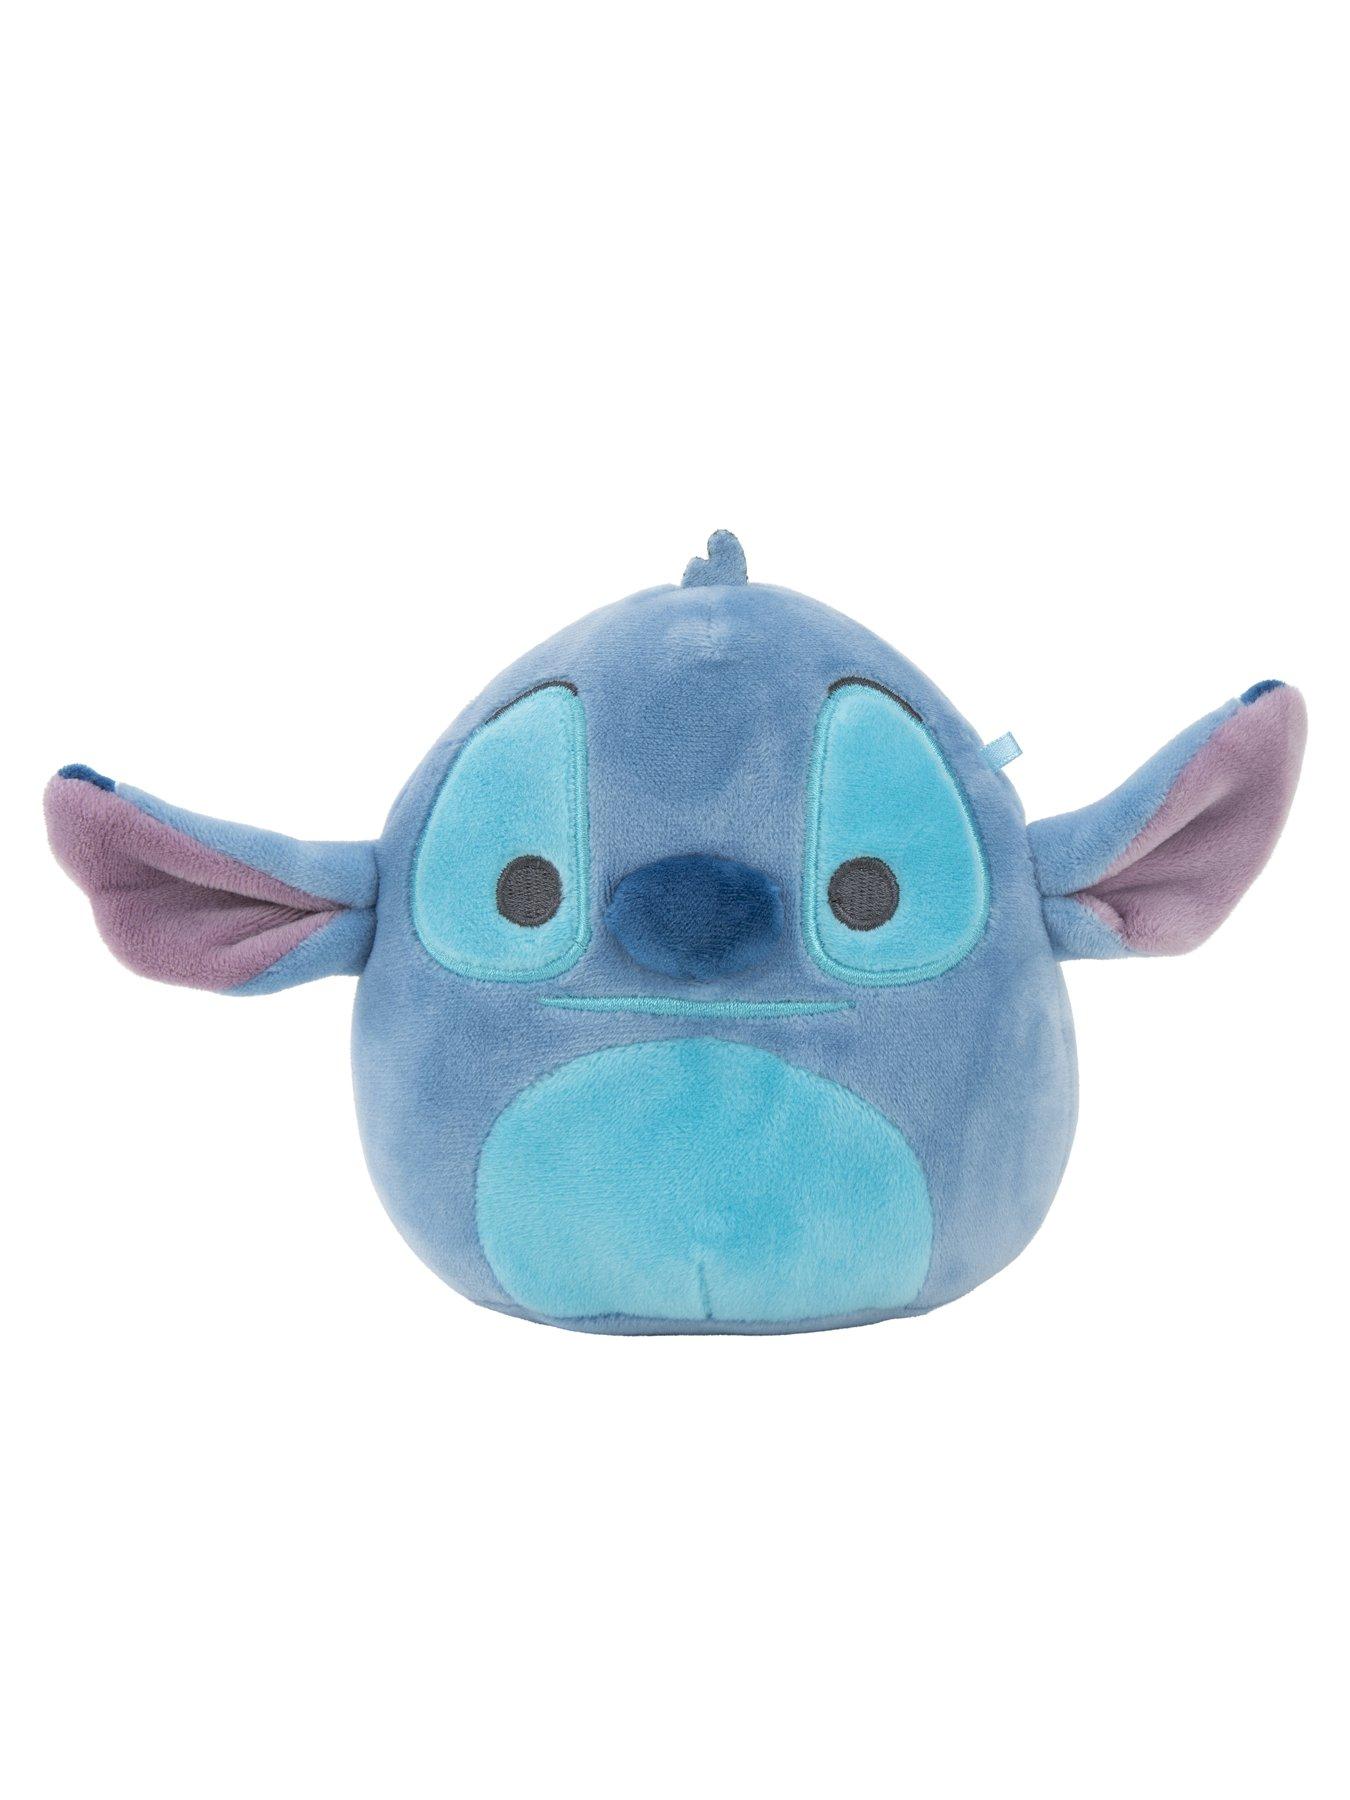 Squishmallow Disney Stitch - Ultrasoft Stuffed Plush Toy